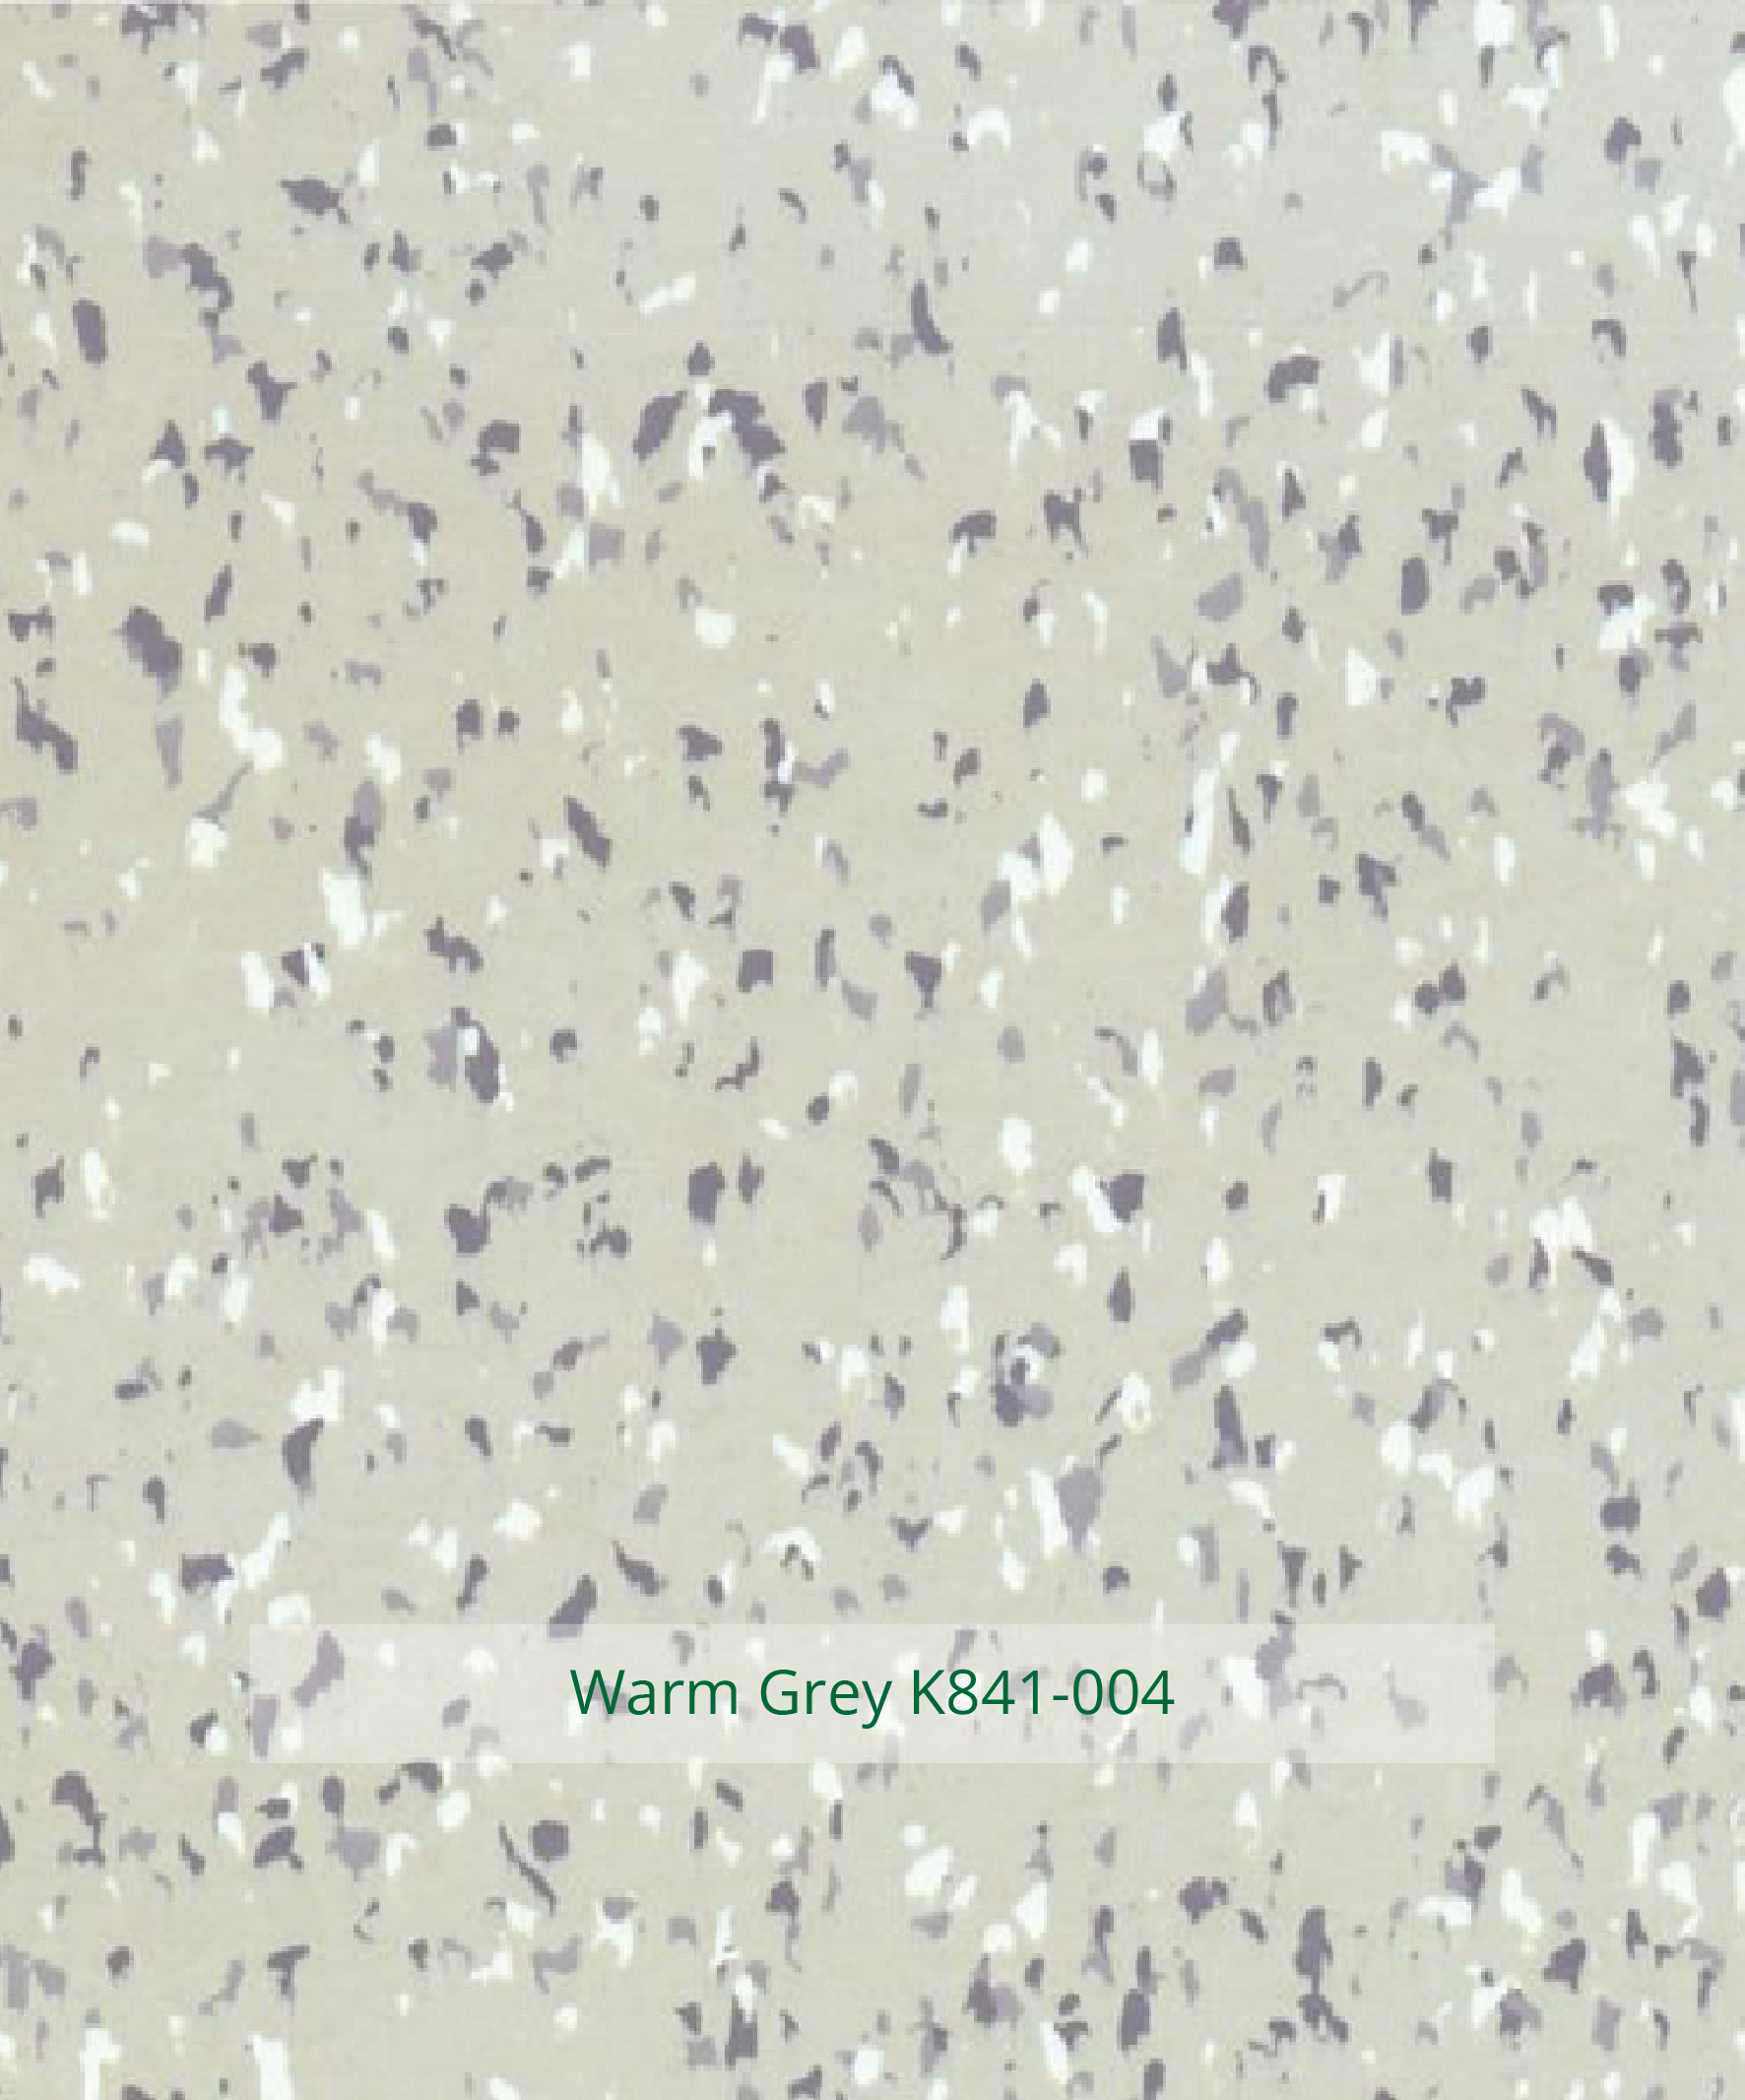 Crysolit Warm Grey K841 004